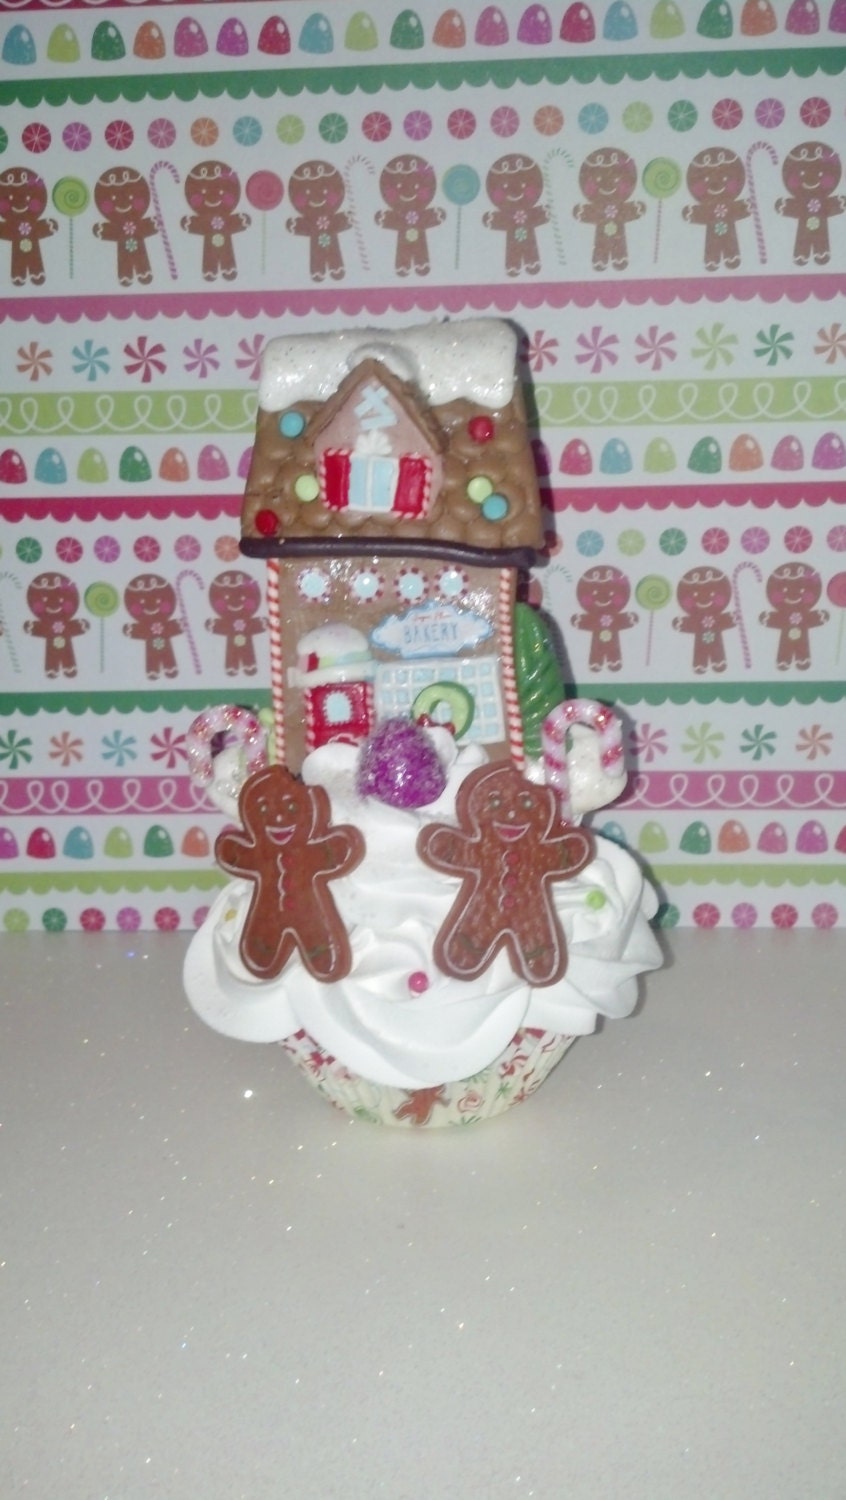 Sugar Plum Bakery Gingerbread House Fake Cupcake Photo Prop, Tree Ornaments, Gingerbread Man, Gumdrops, Festive Christmas Decorations